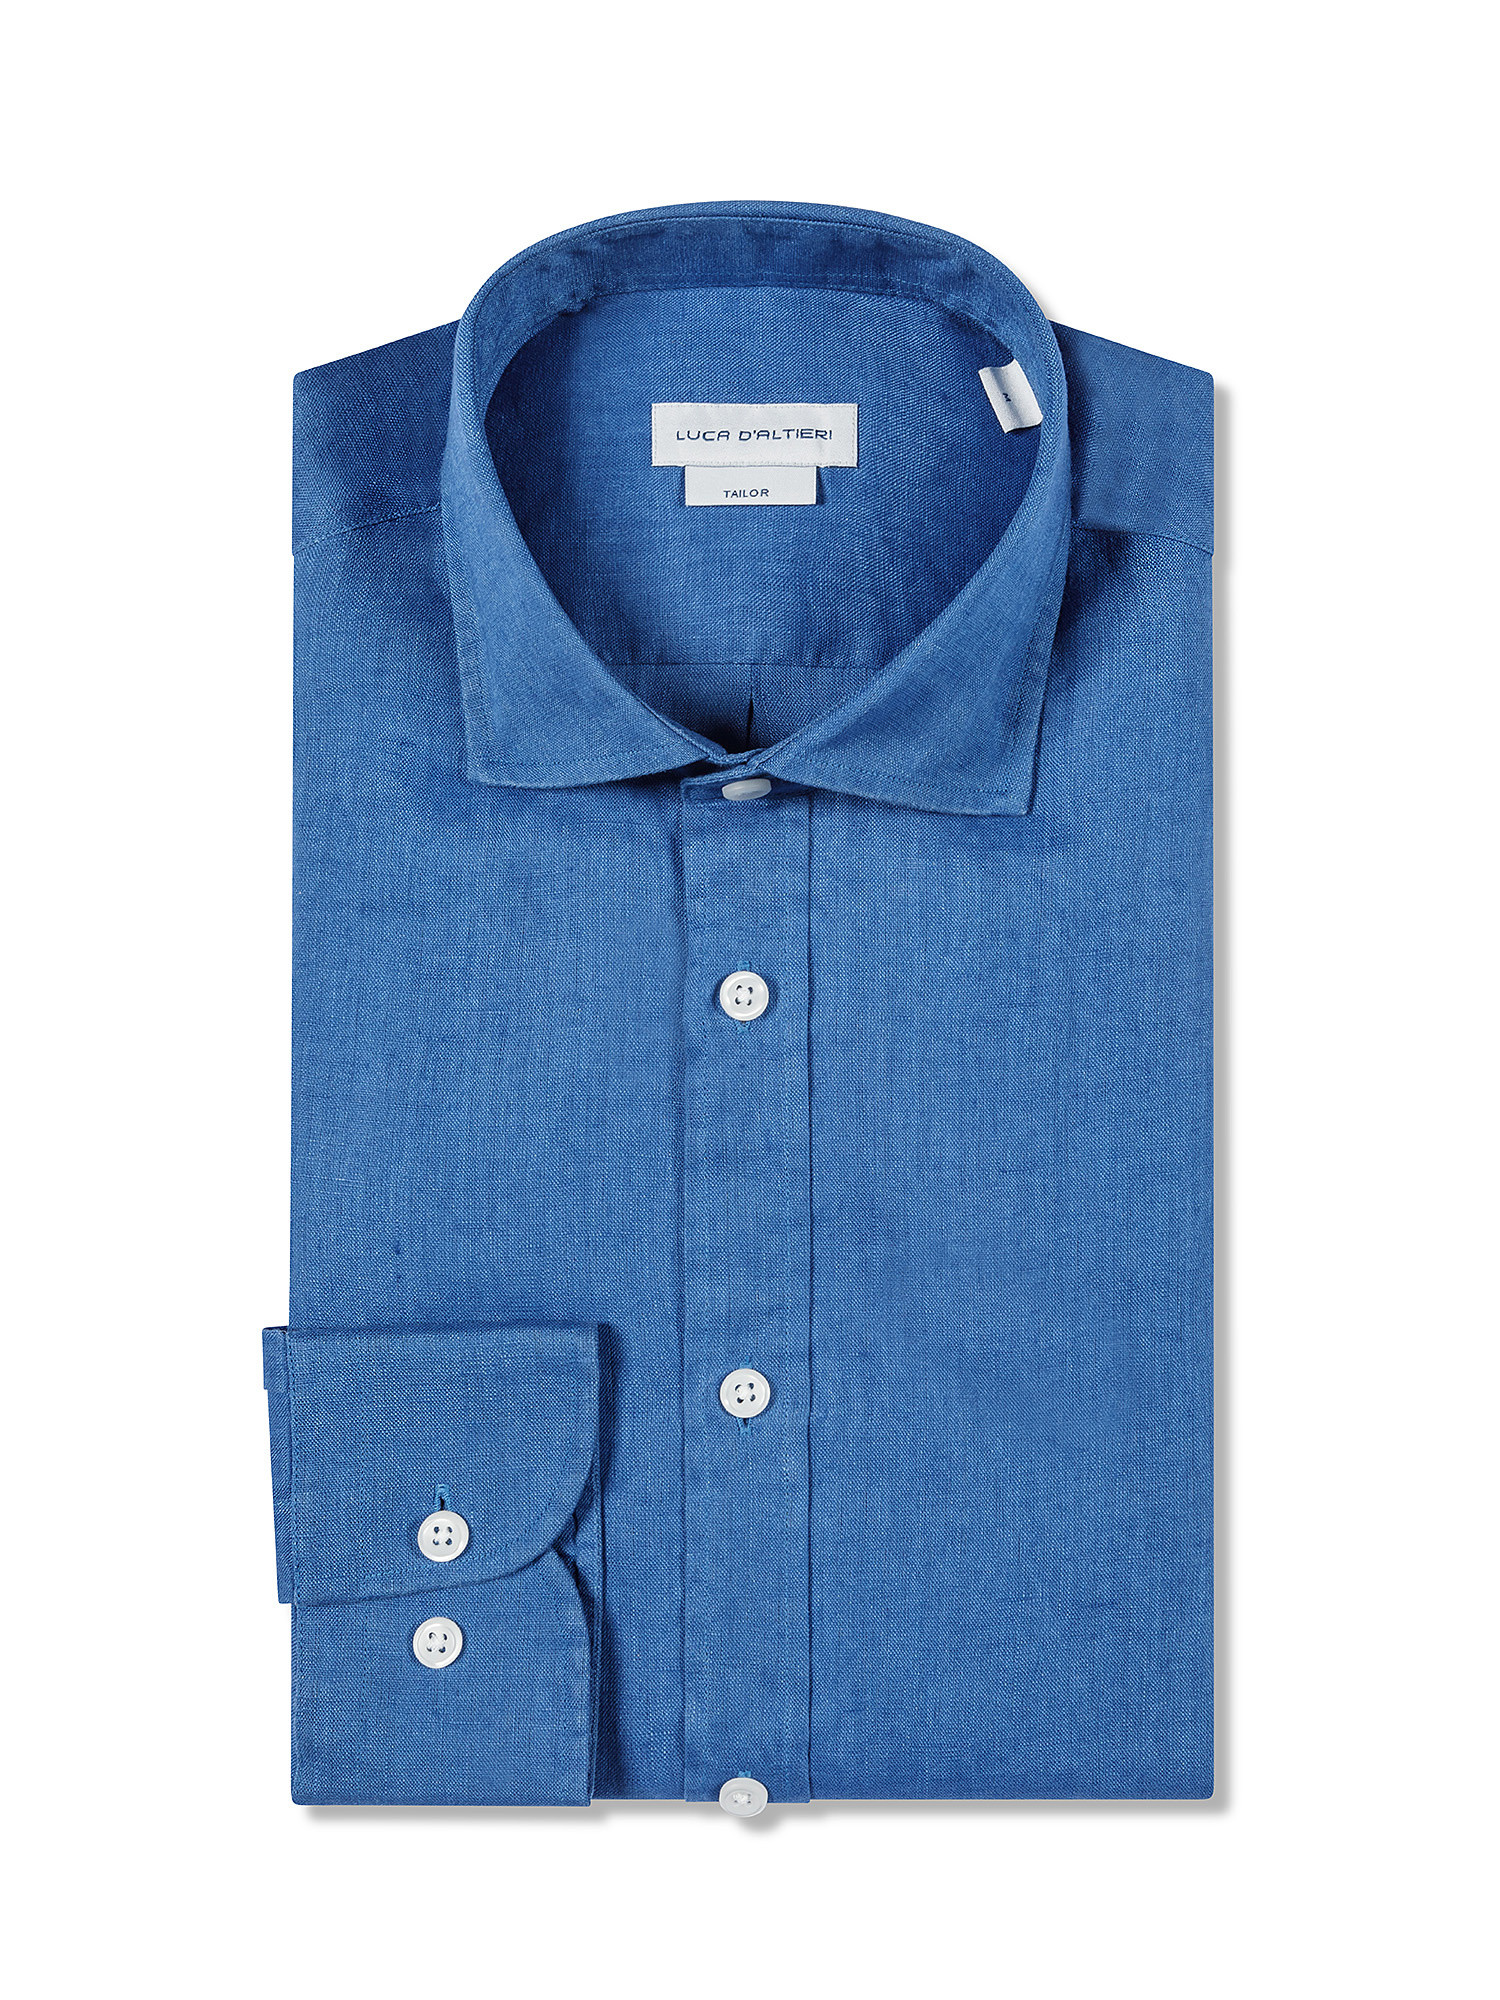 Luca D'Altieri - Tailor fit shirt in pure linen, Blue Cornflower, large image number 2